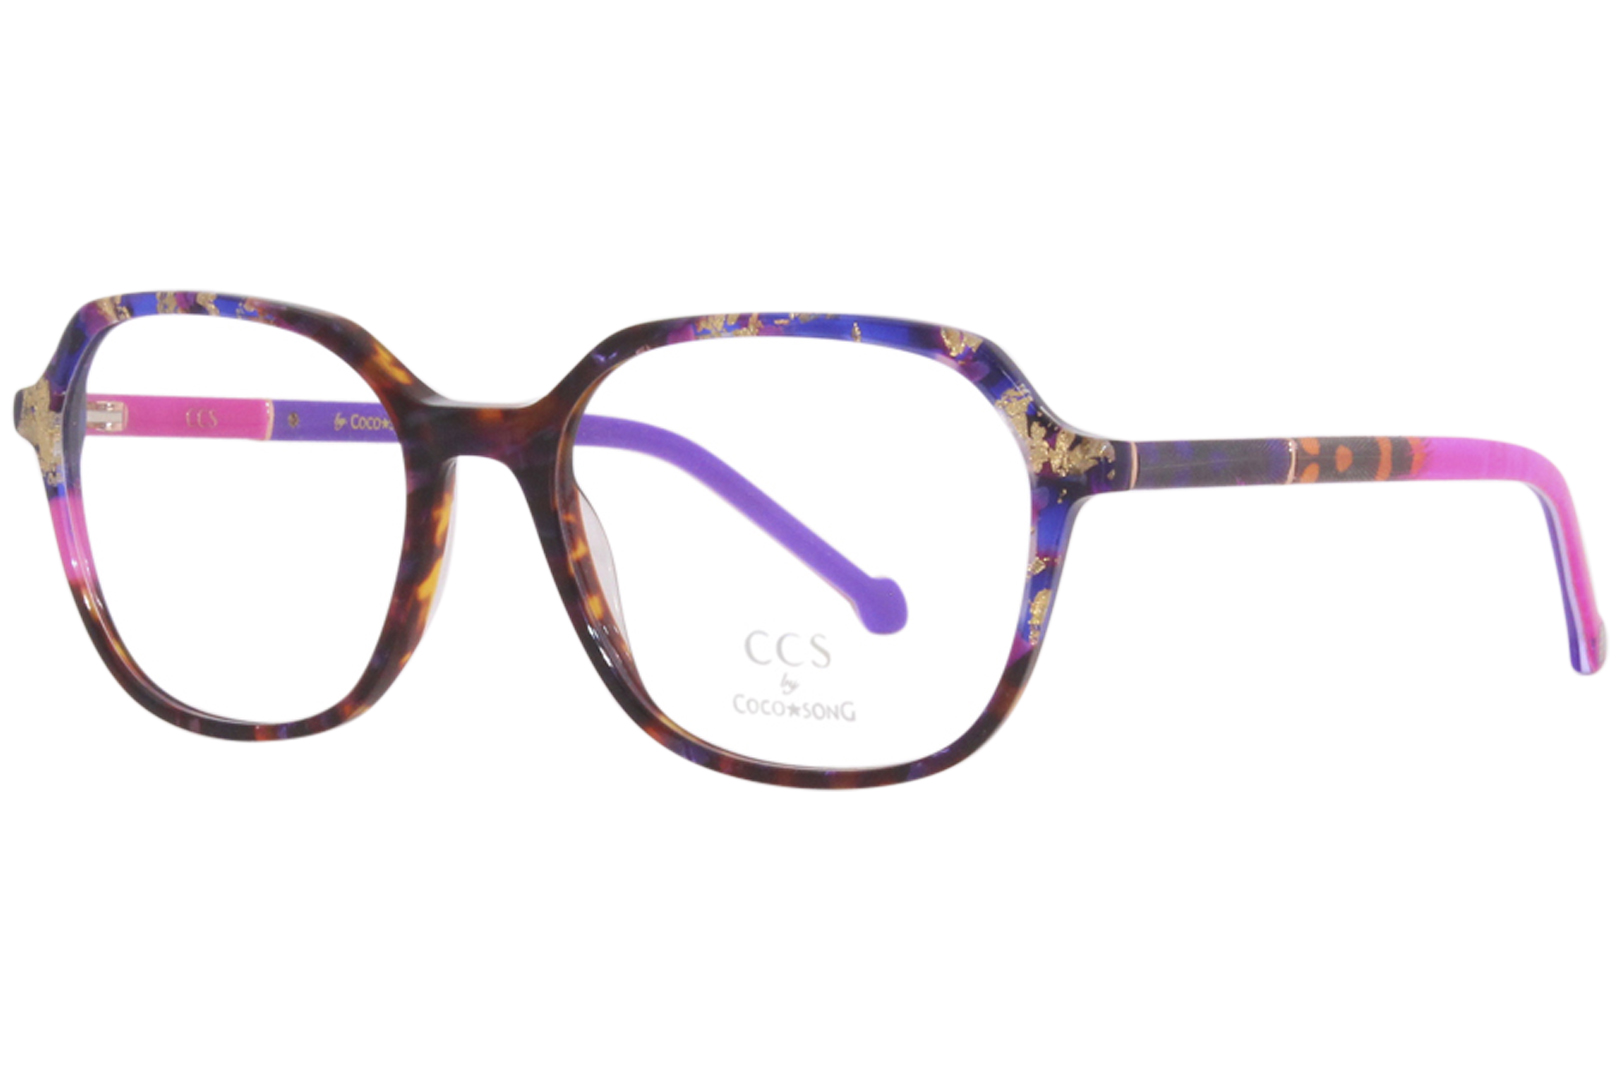 Coco Song CCS181-3 Eyeglasses Women's 24K Gold Inserts/Purple Full Rim 53mm